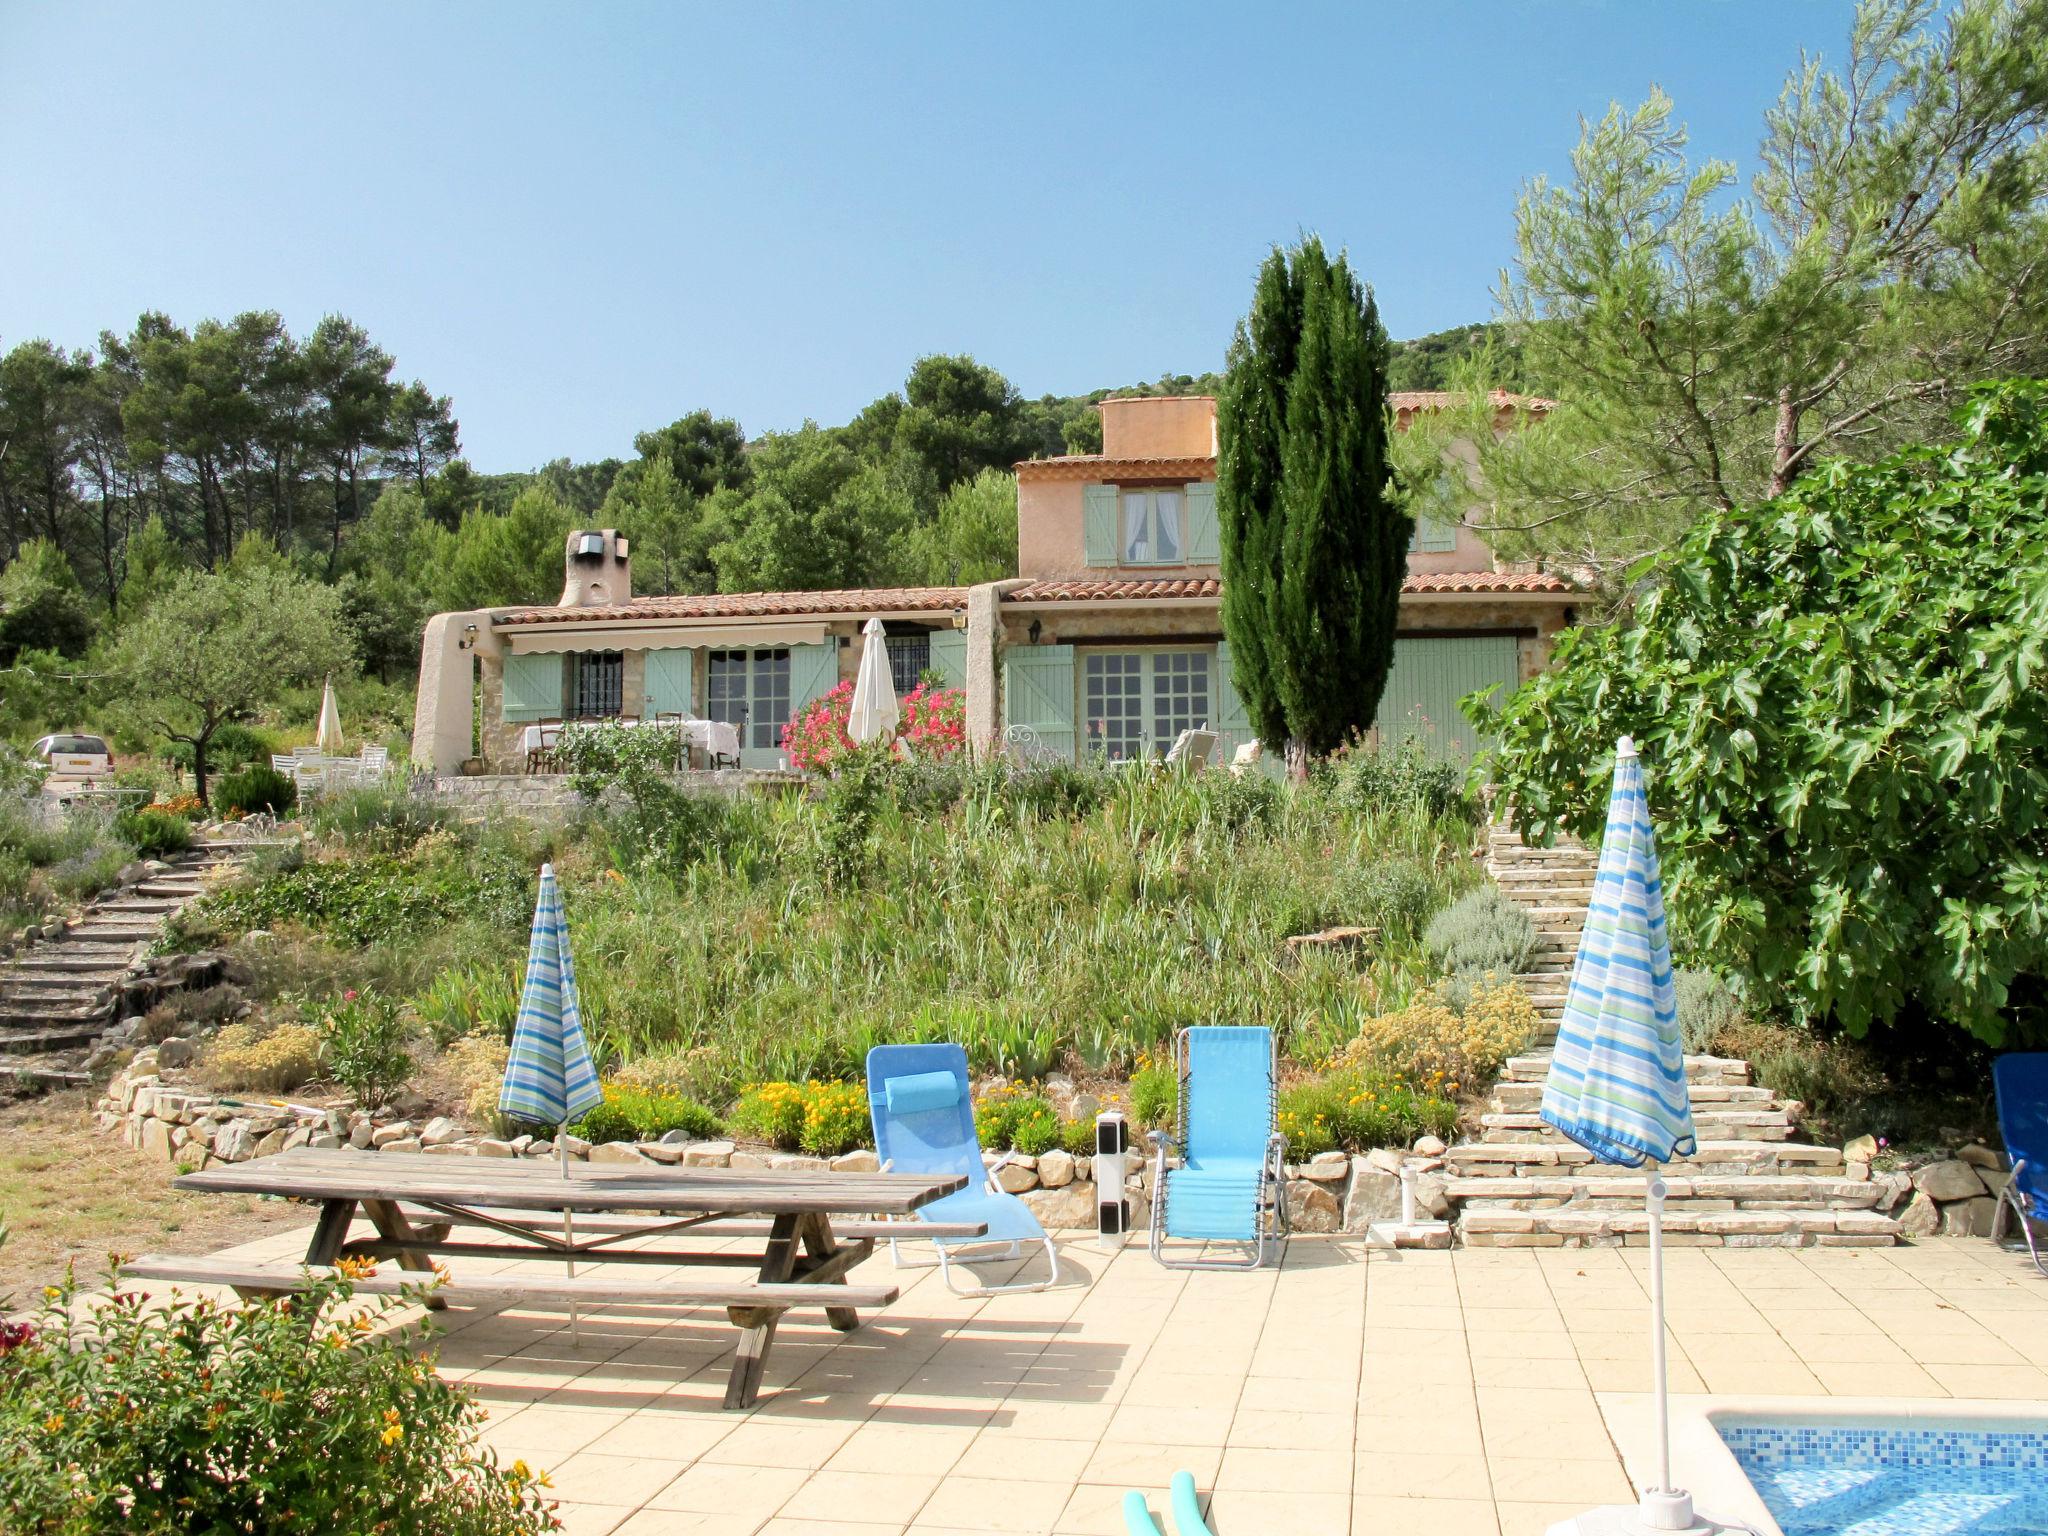 Foto 8 - Casa con 4 camere da letto a Forcalqueiret con piscina privata e giardino